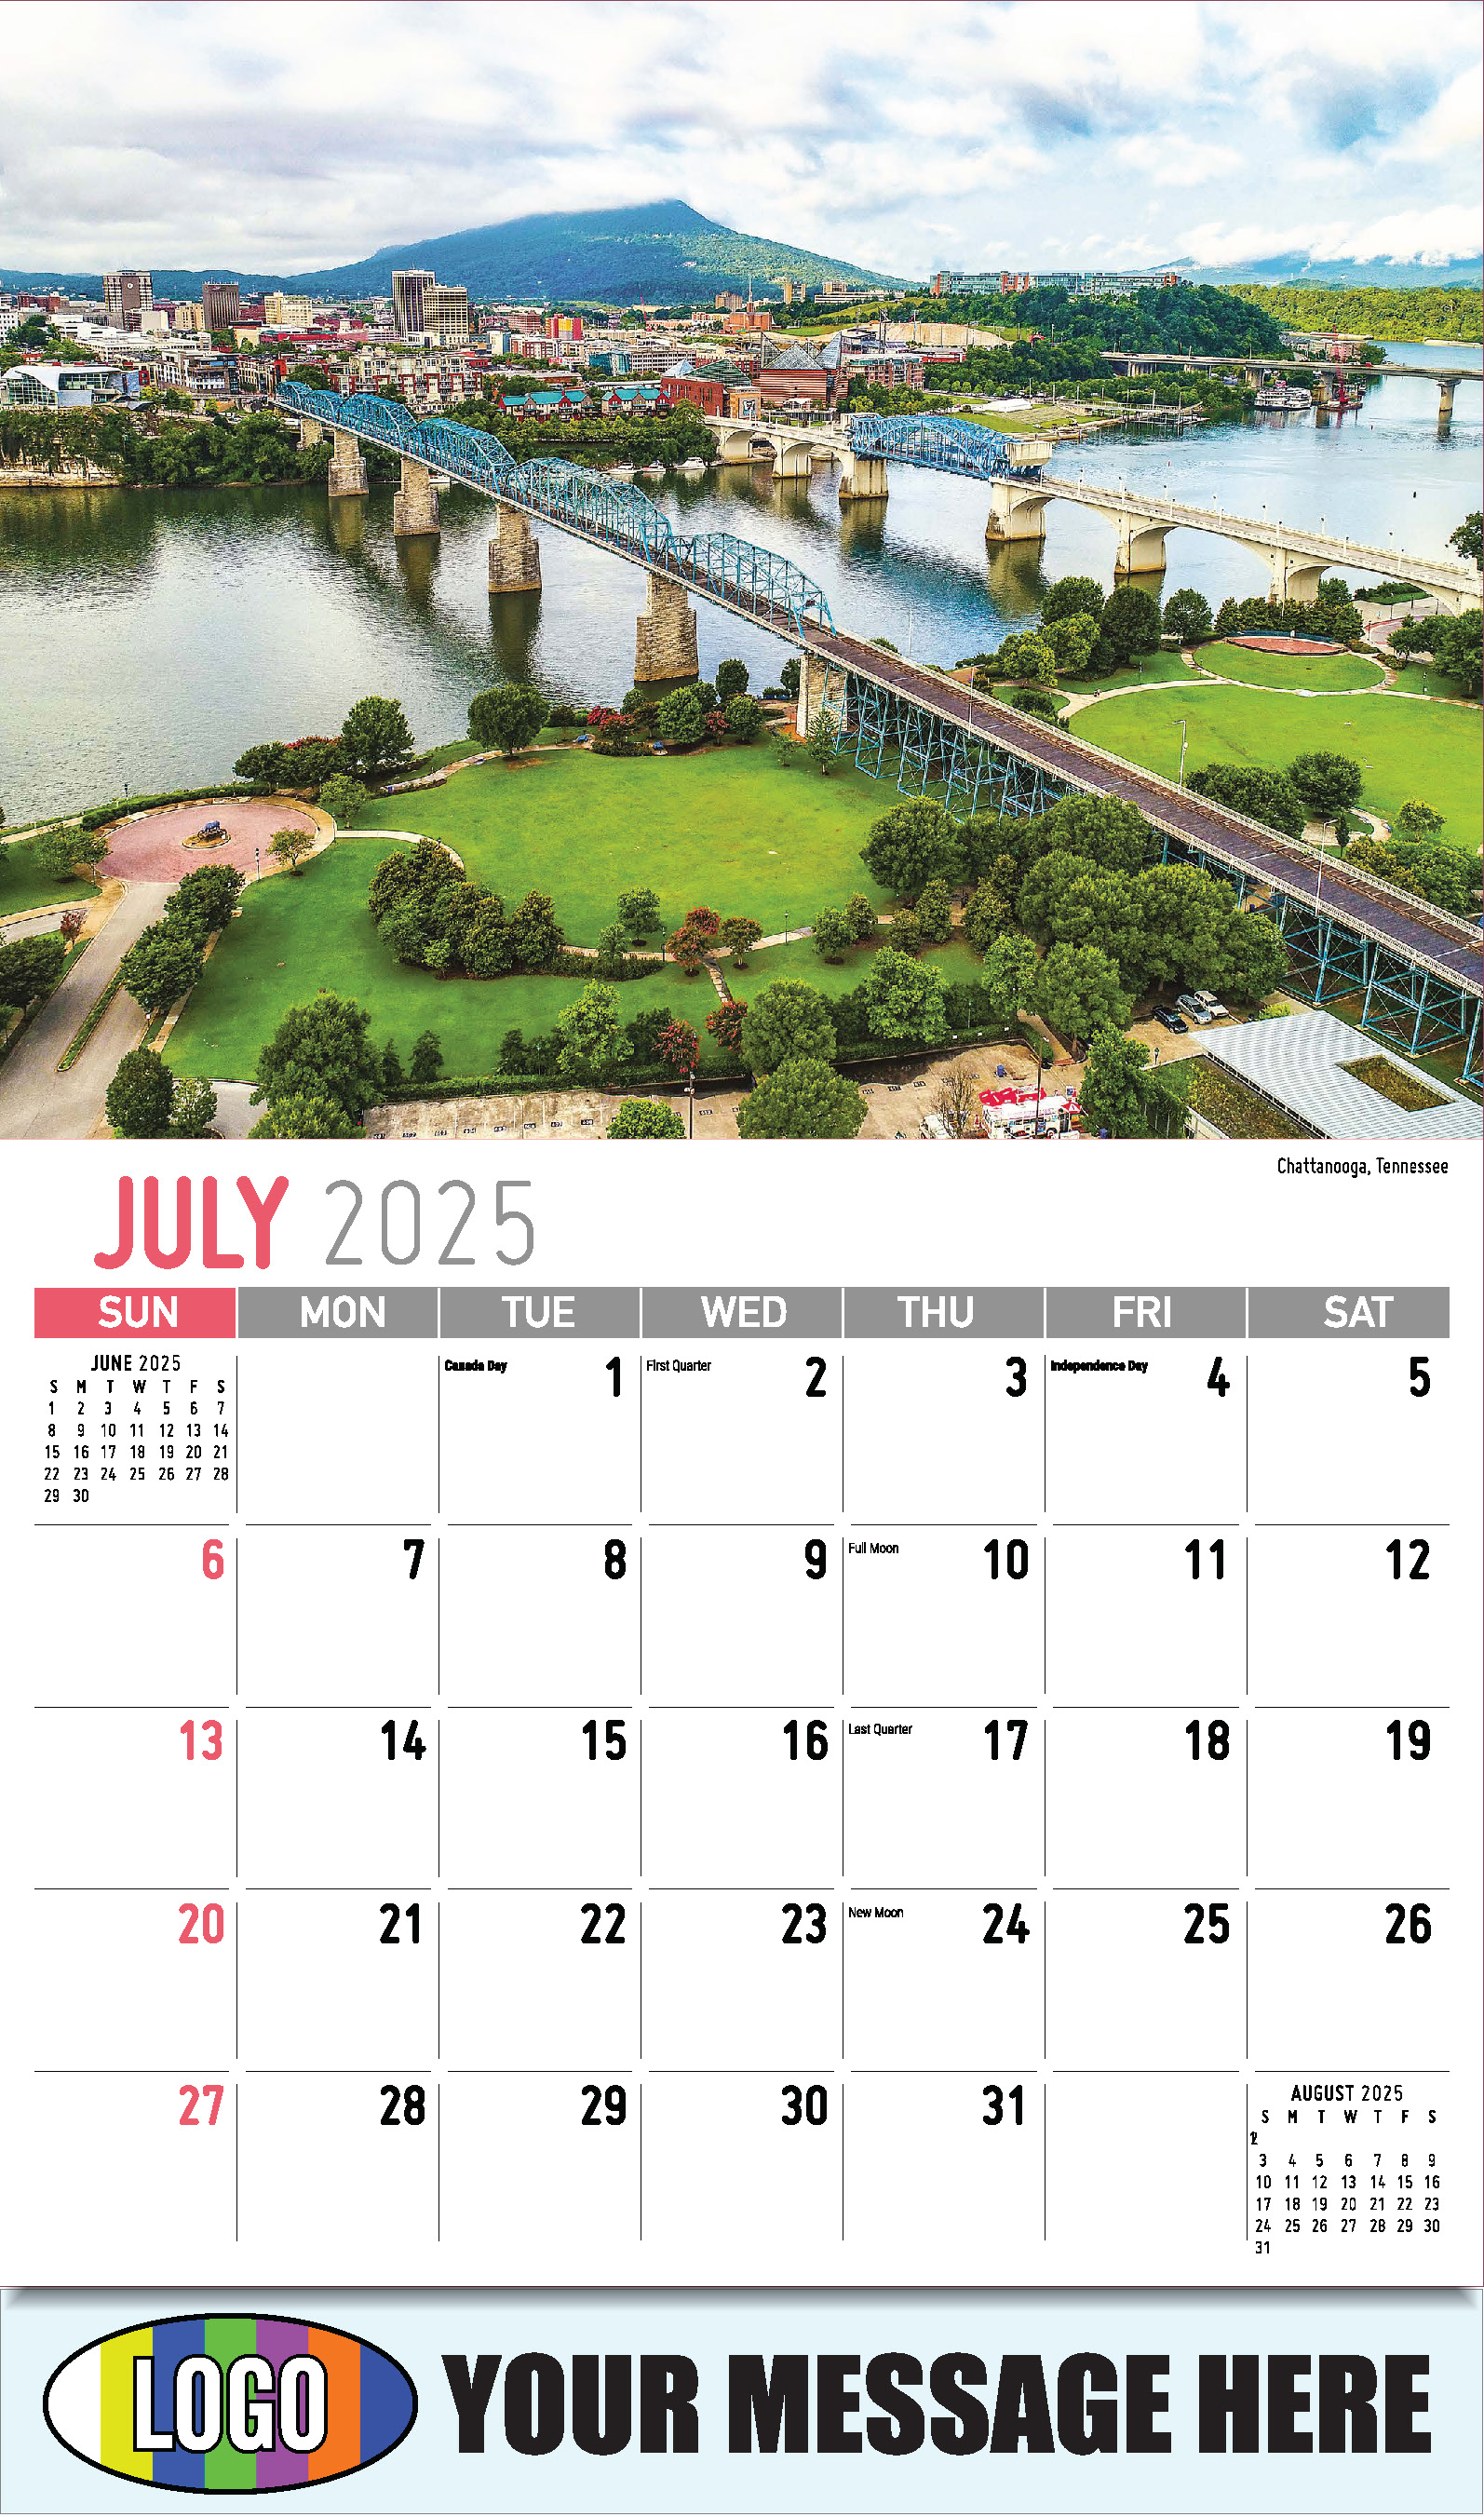 Scenes of Southeast USA 2025 Business Promo Wall Calendar - July